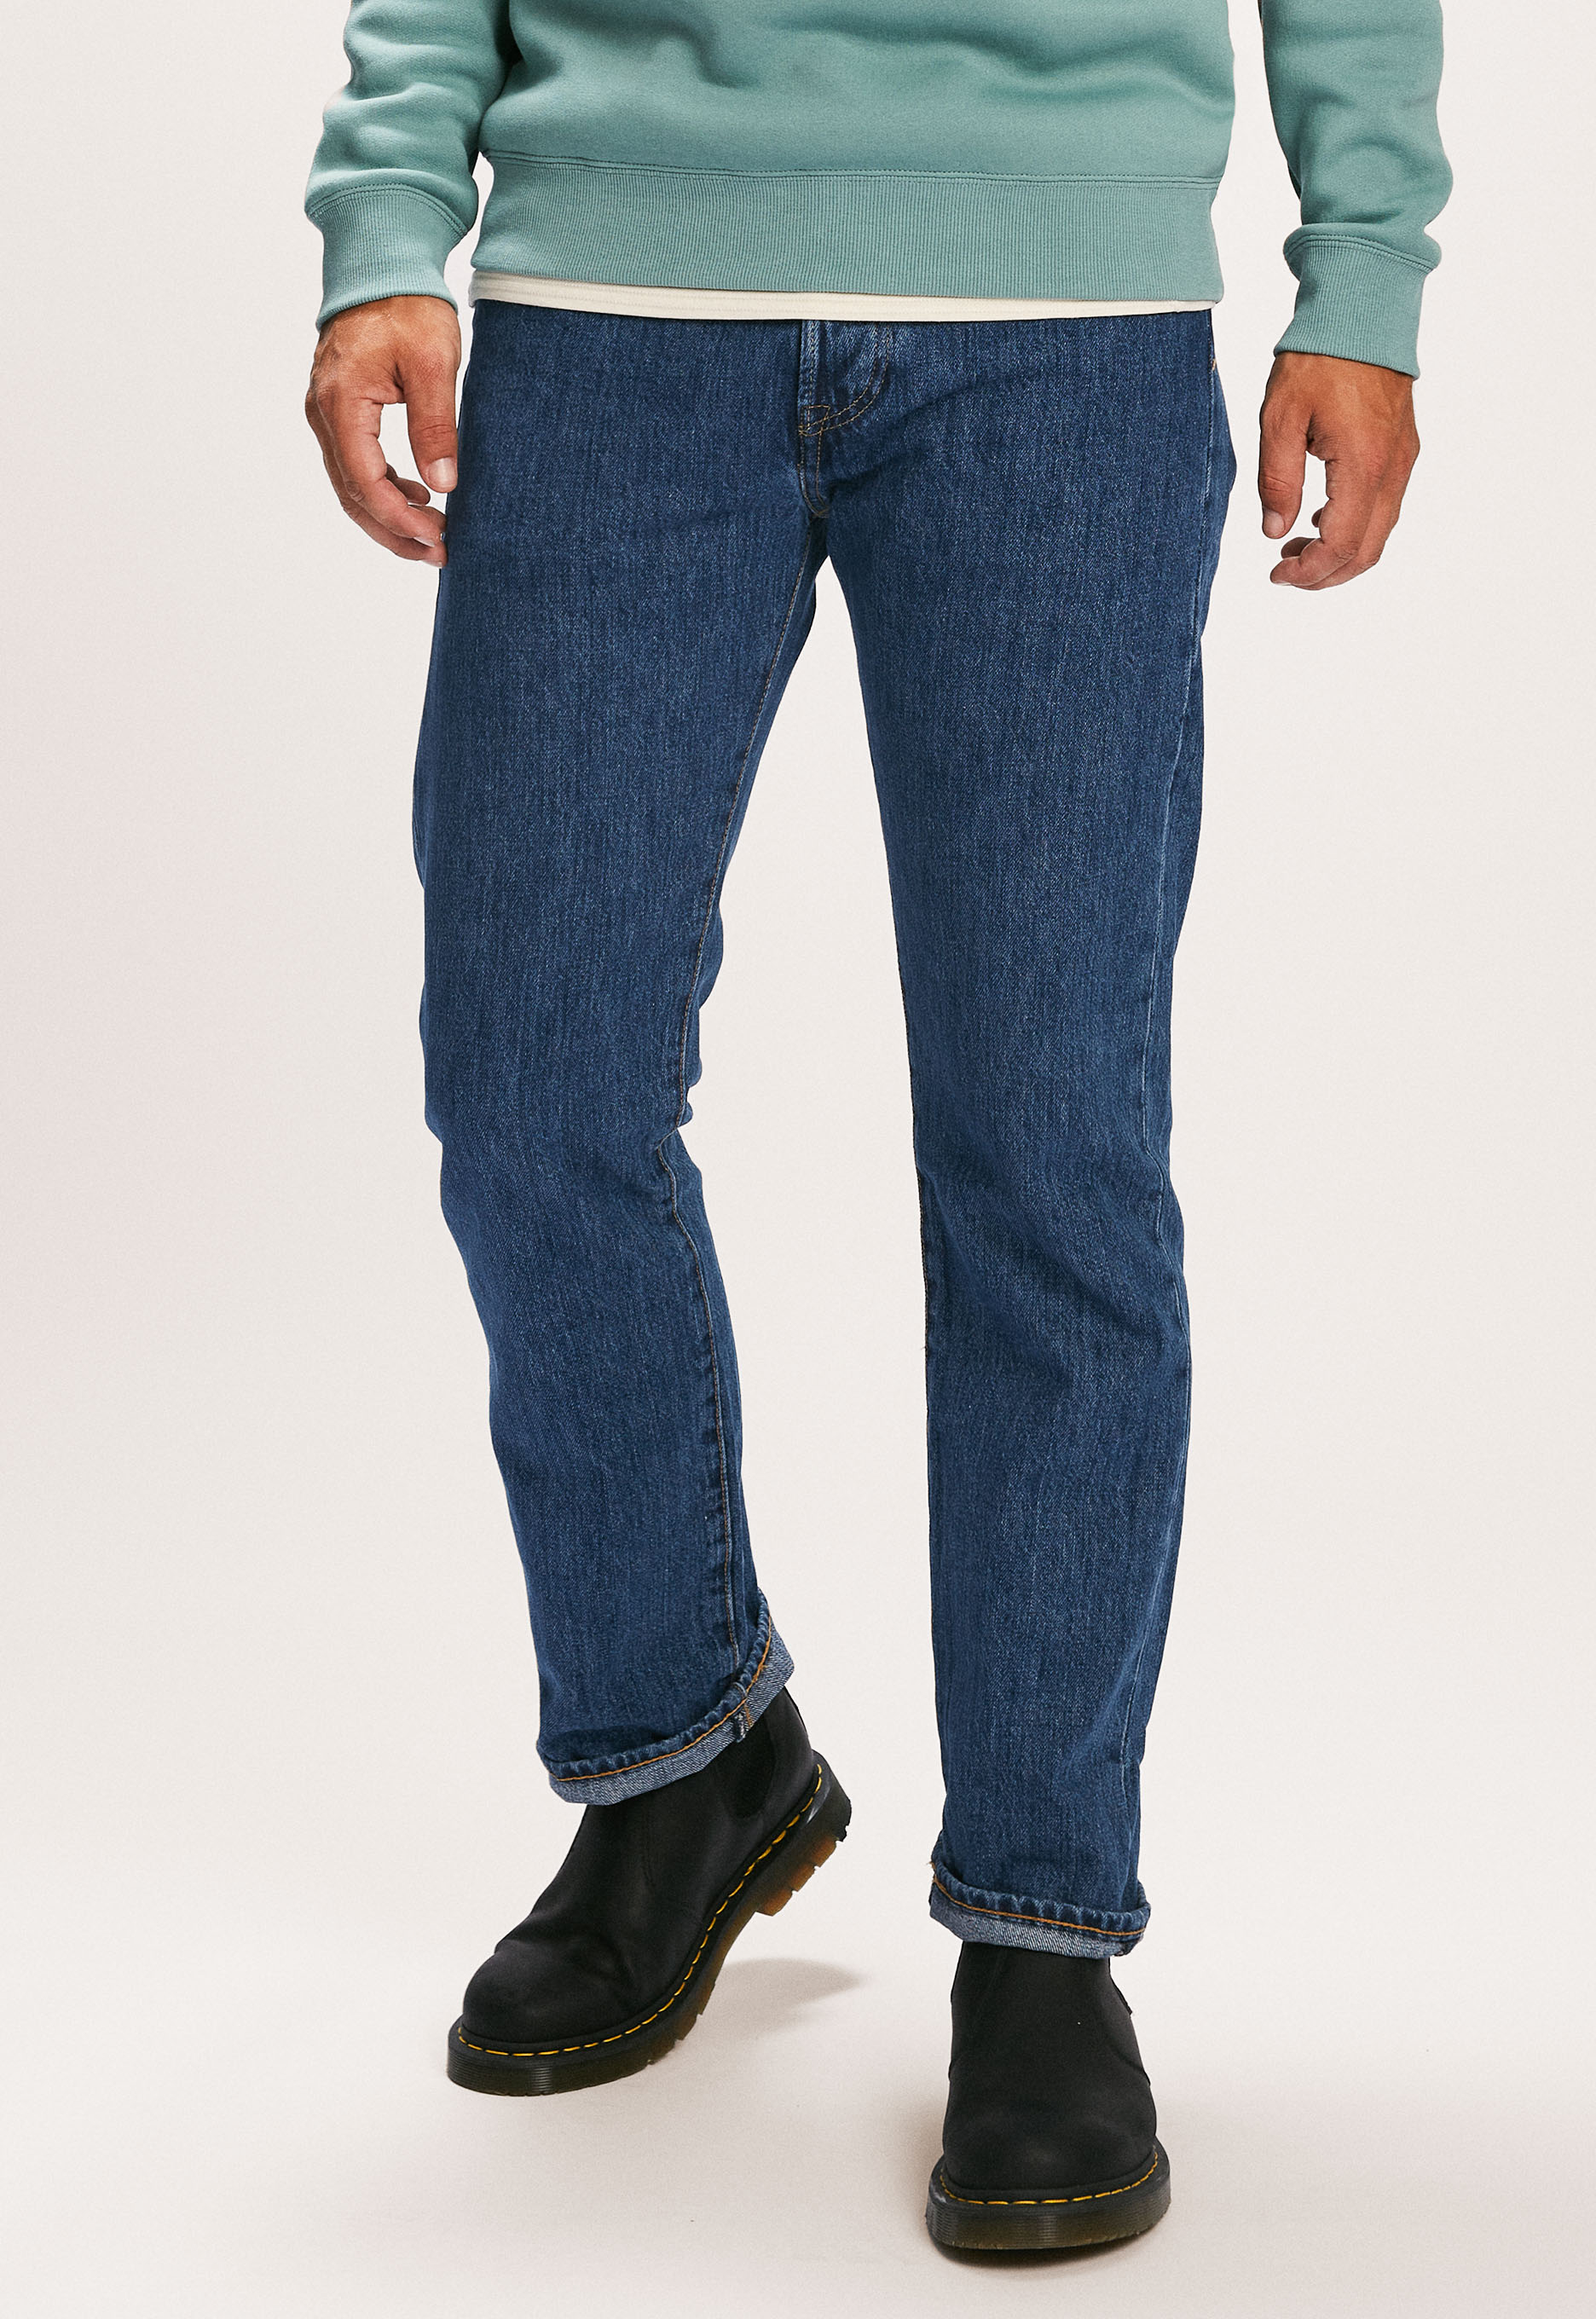 Levi's 501 Original Straight Jeans